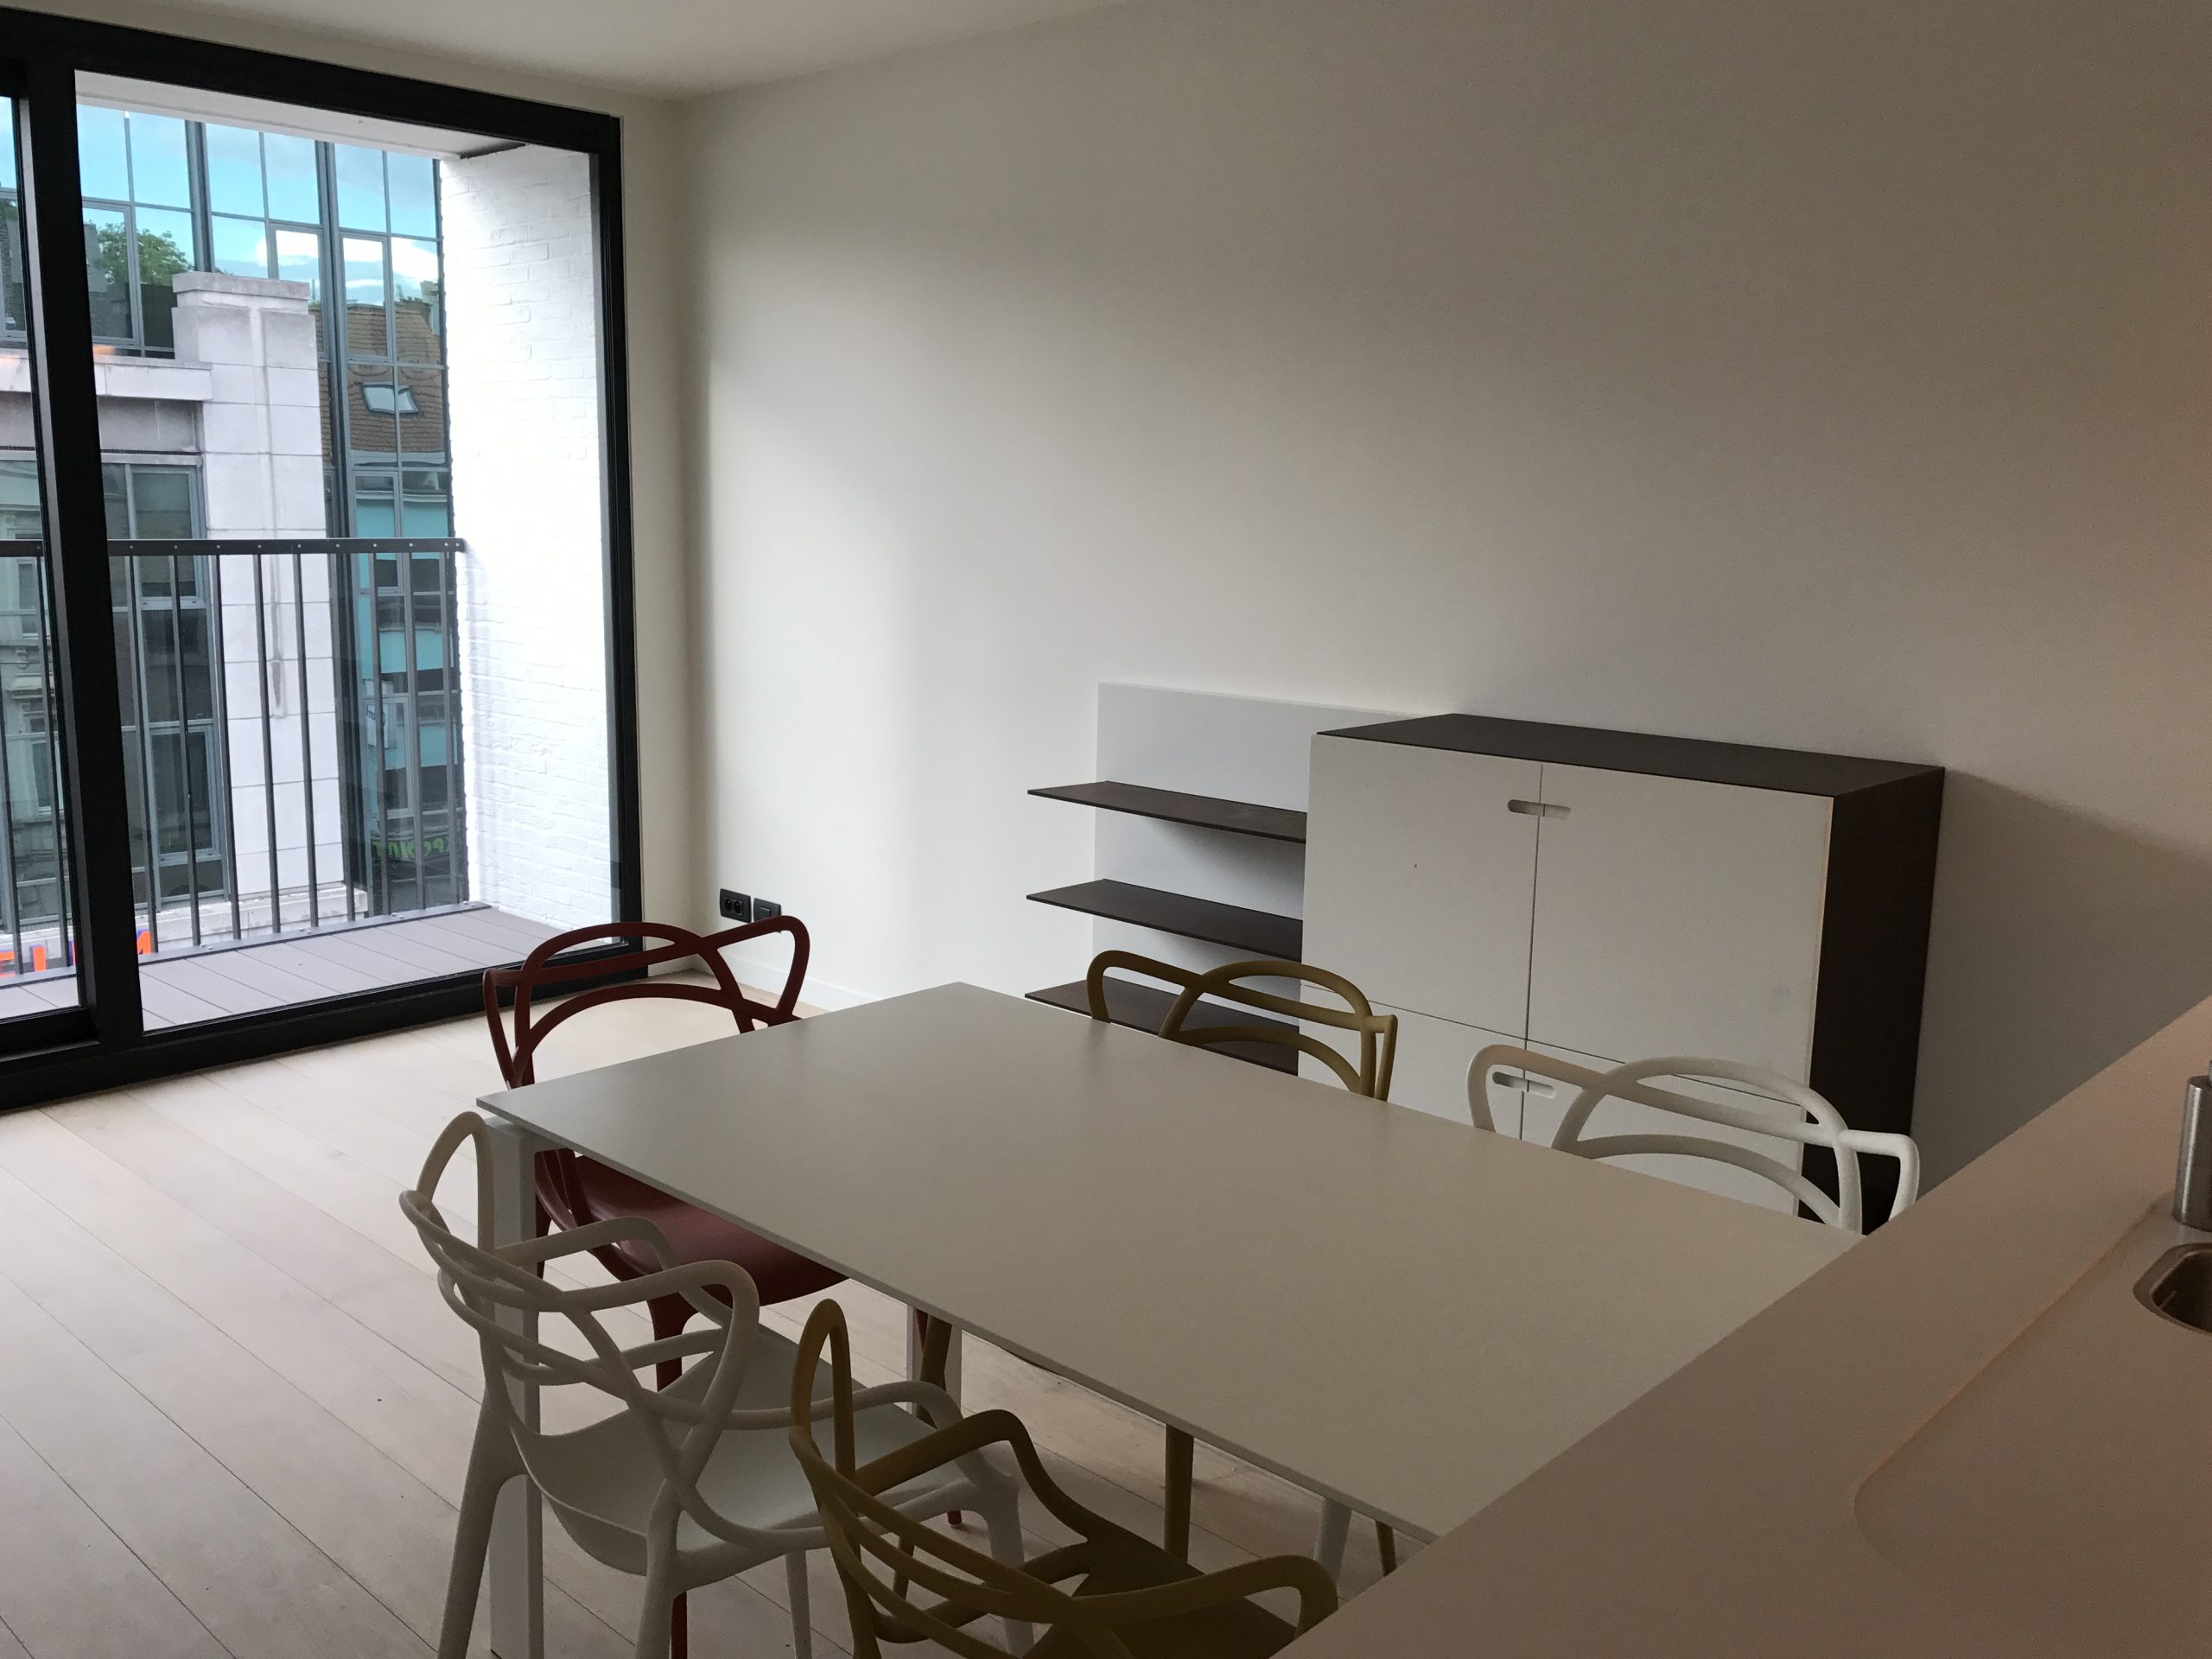 Livingroom - 1-bedroom apartment for rent in Ghent